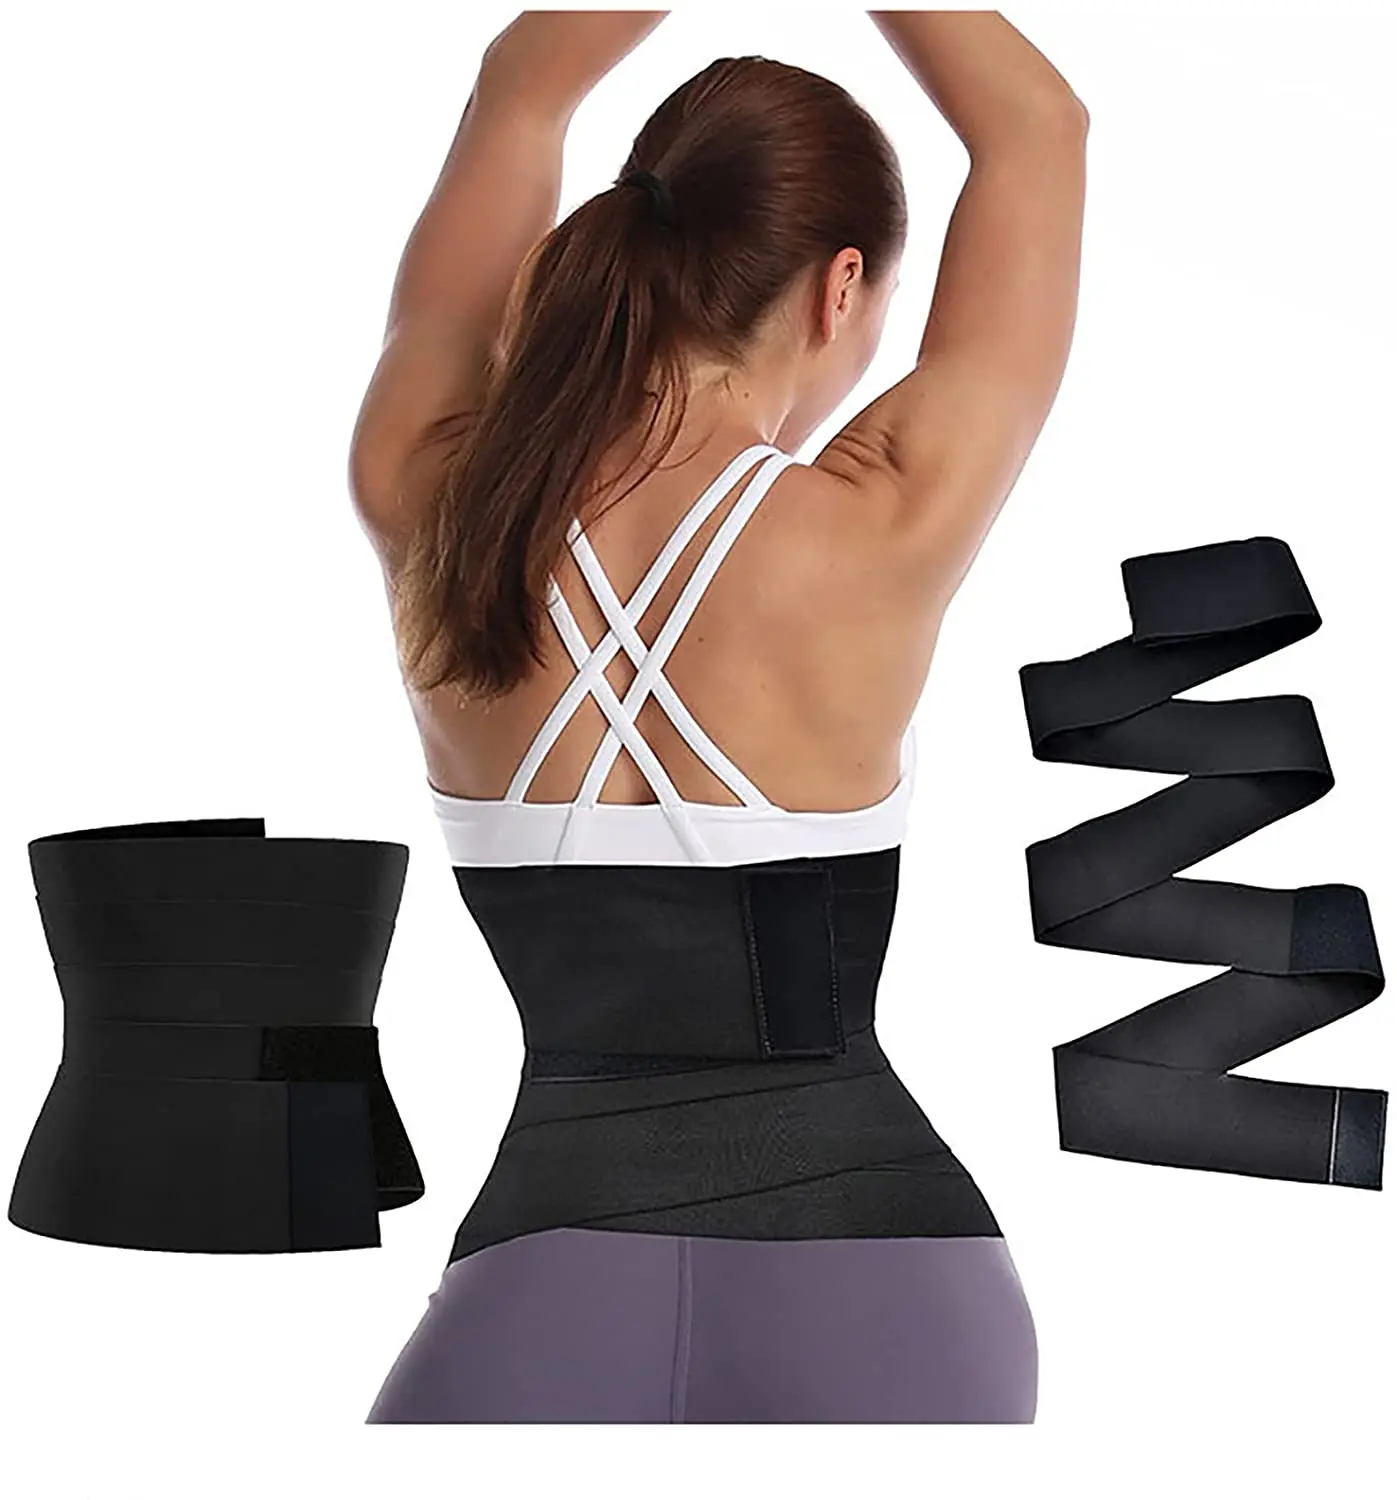 

KSY High Quality Women Bandage Tummy Wrap Waist Trimmer Corset Support Trainer Shaper Training Belt Band Waist Wrap, Black red brown